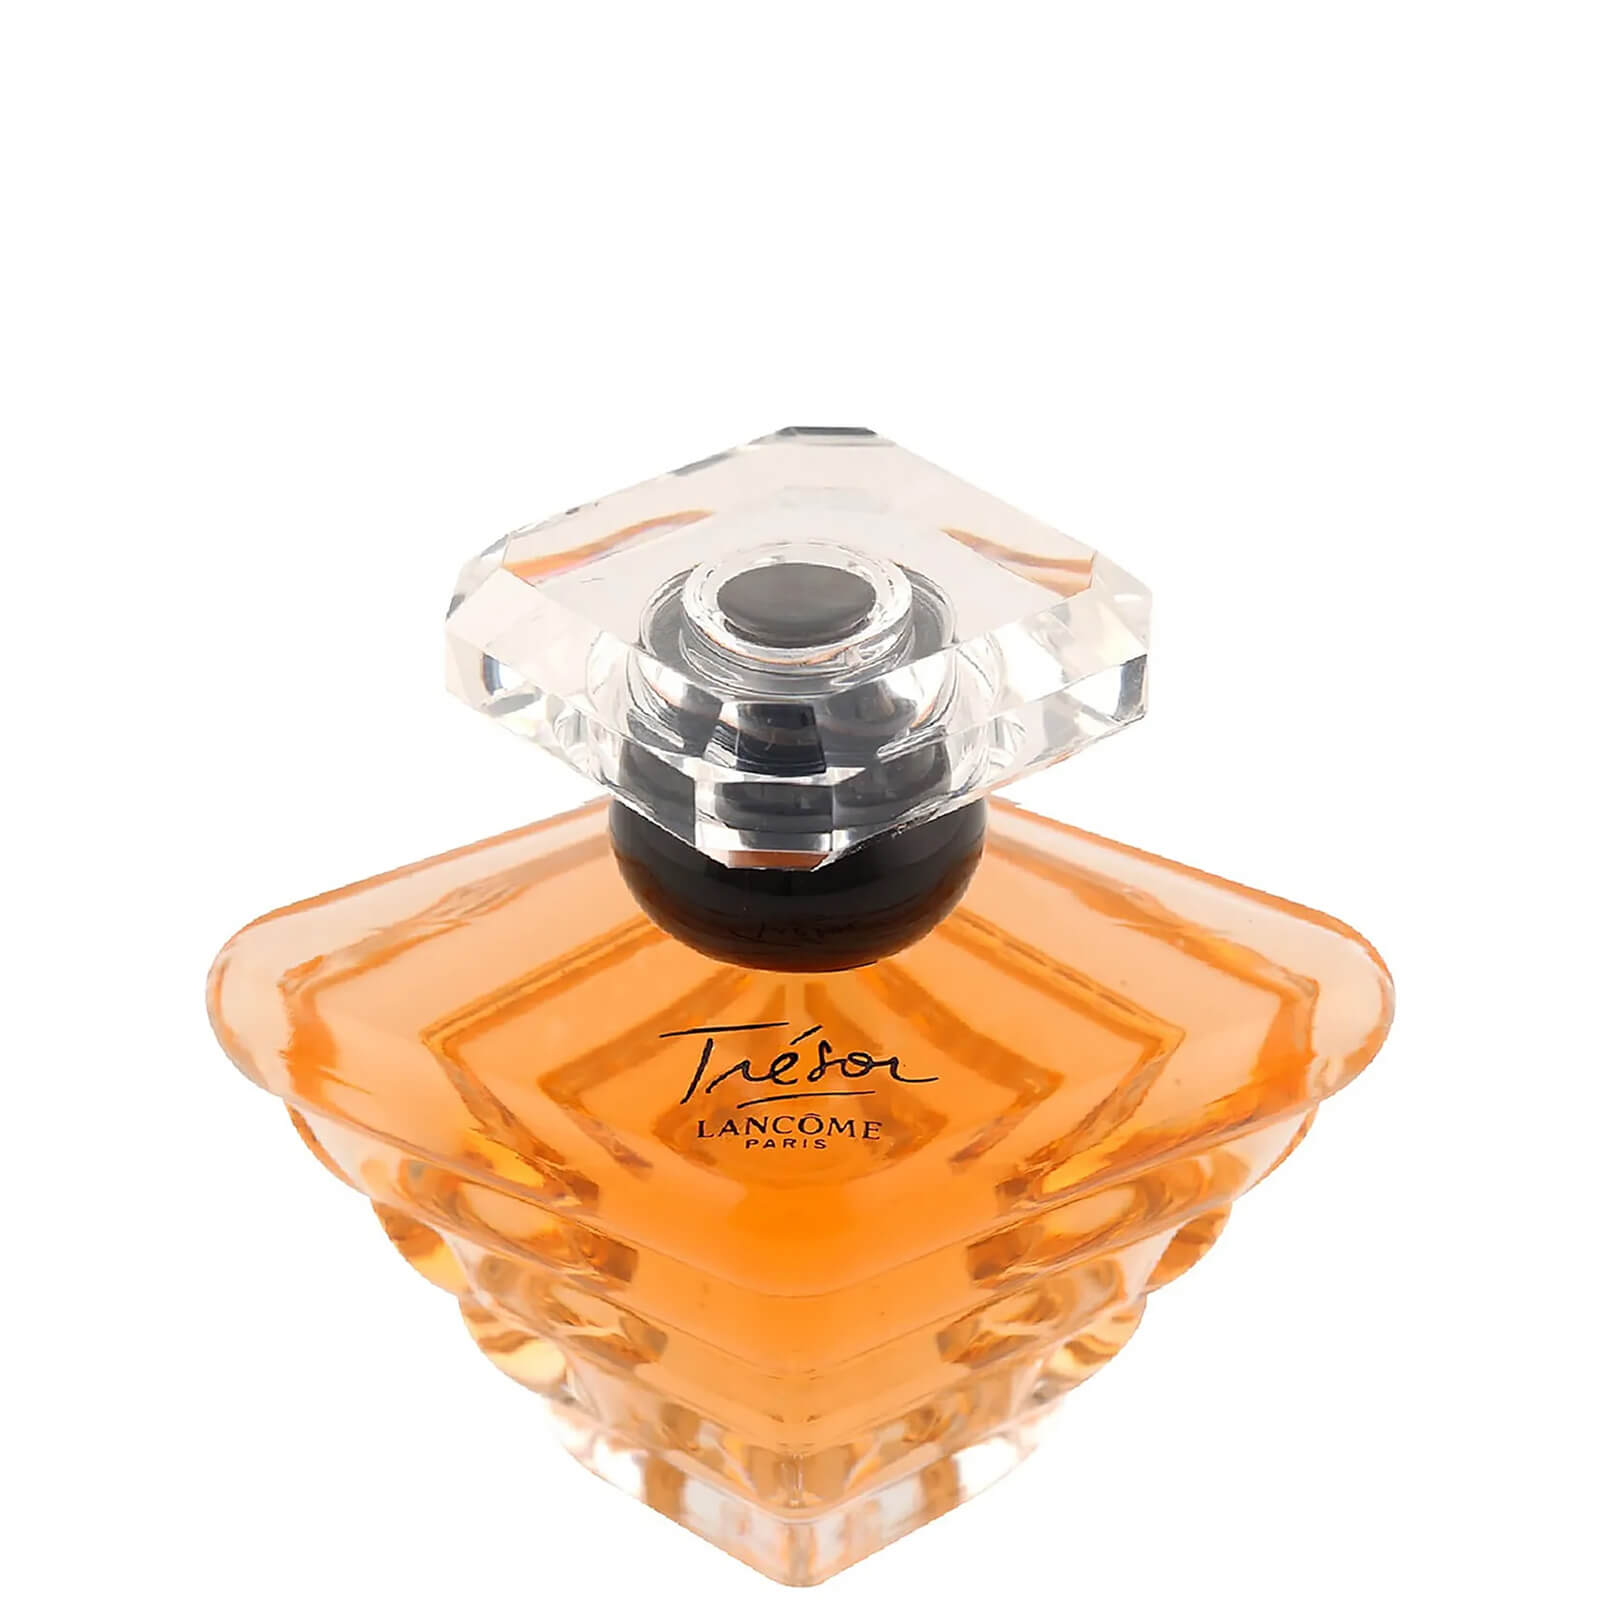 Lancôme Trésor Eau de Parfum Spray 30 ml